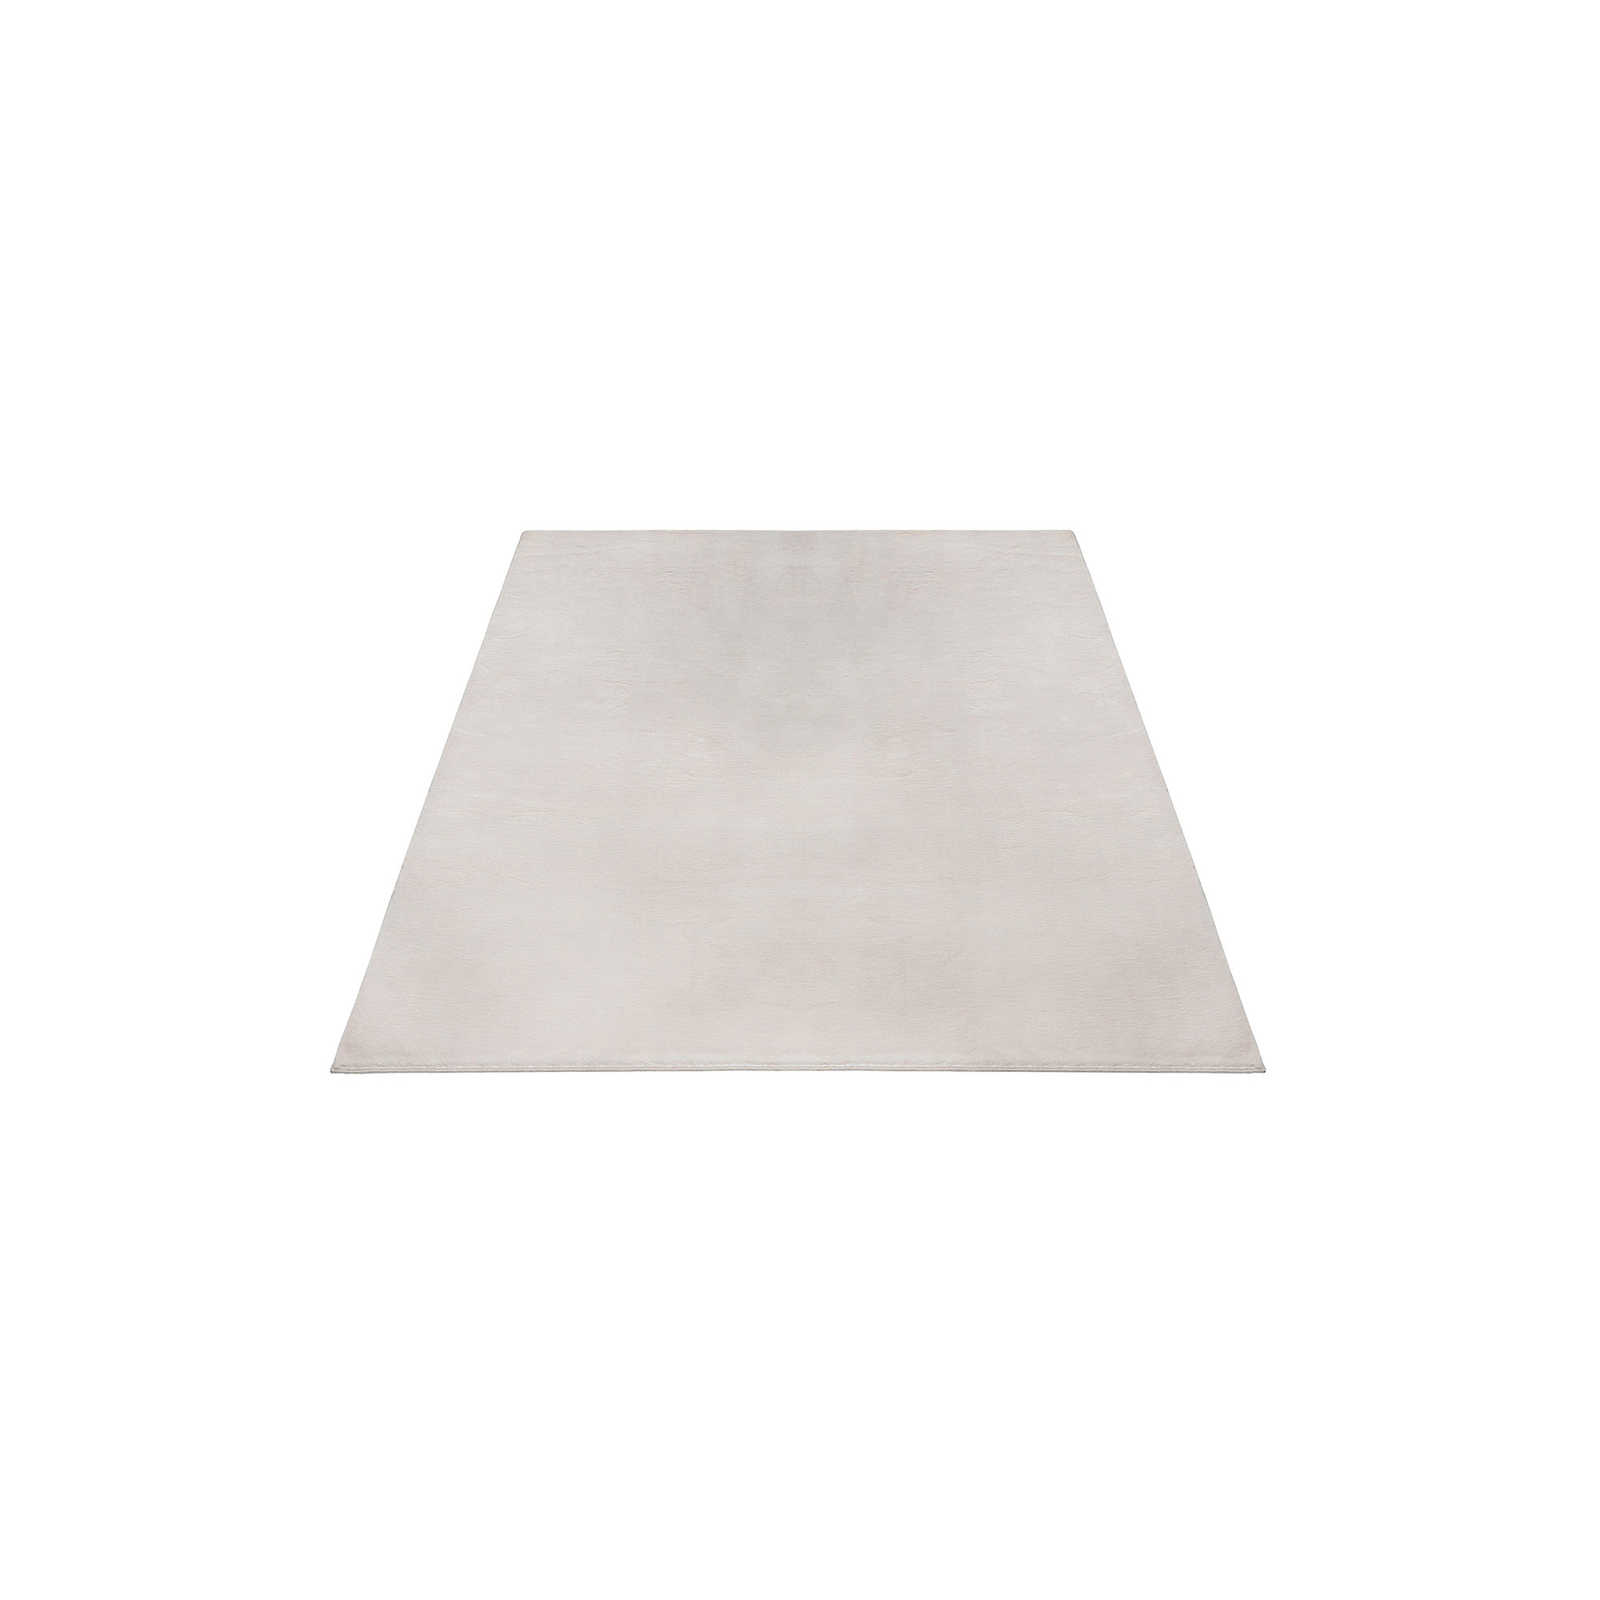 Knuffelzacht hoogpolig tapijt in lichtbeige - 170 x 120 cm
